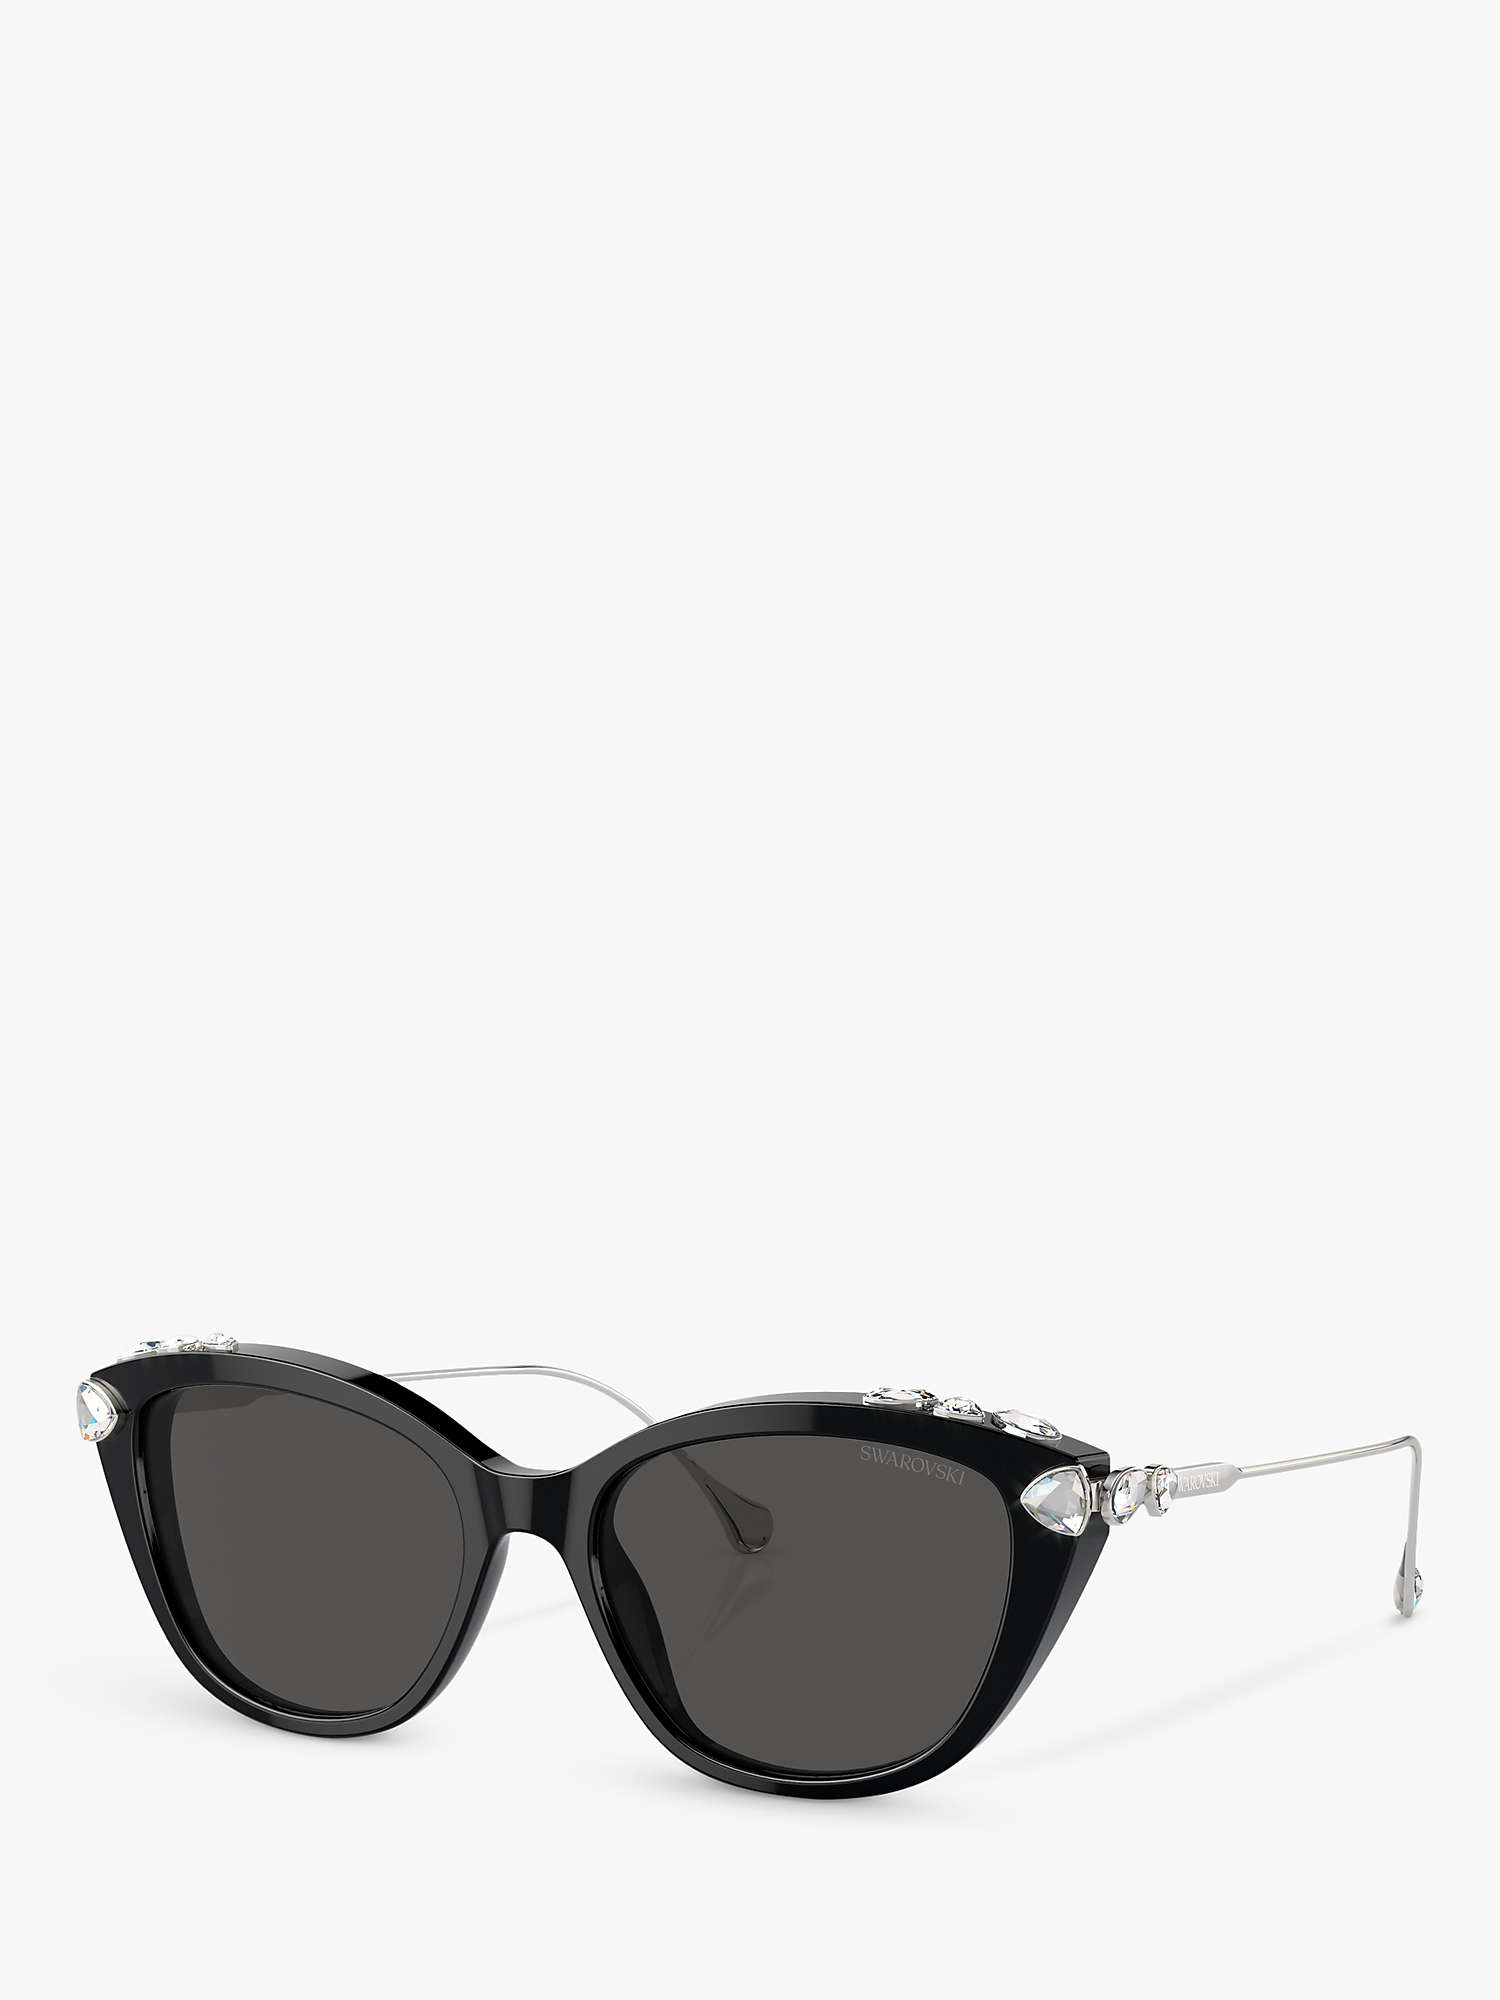 Buy Swarovski SK6010 Women's Crystal Cat's Eye Sunglasses, Black Online at johnlewis.com